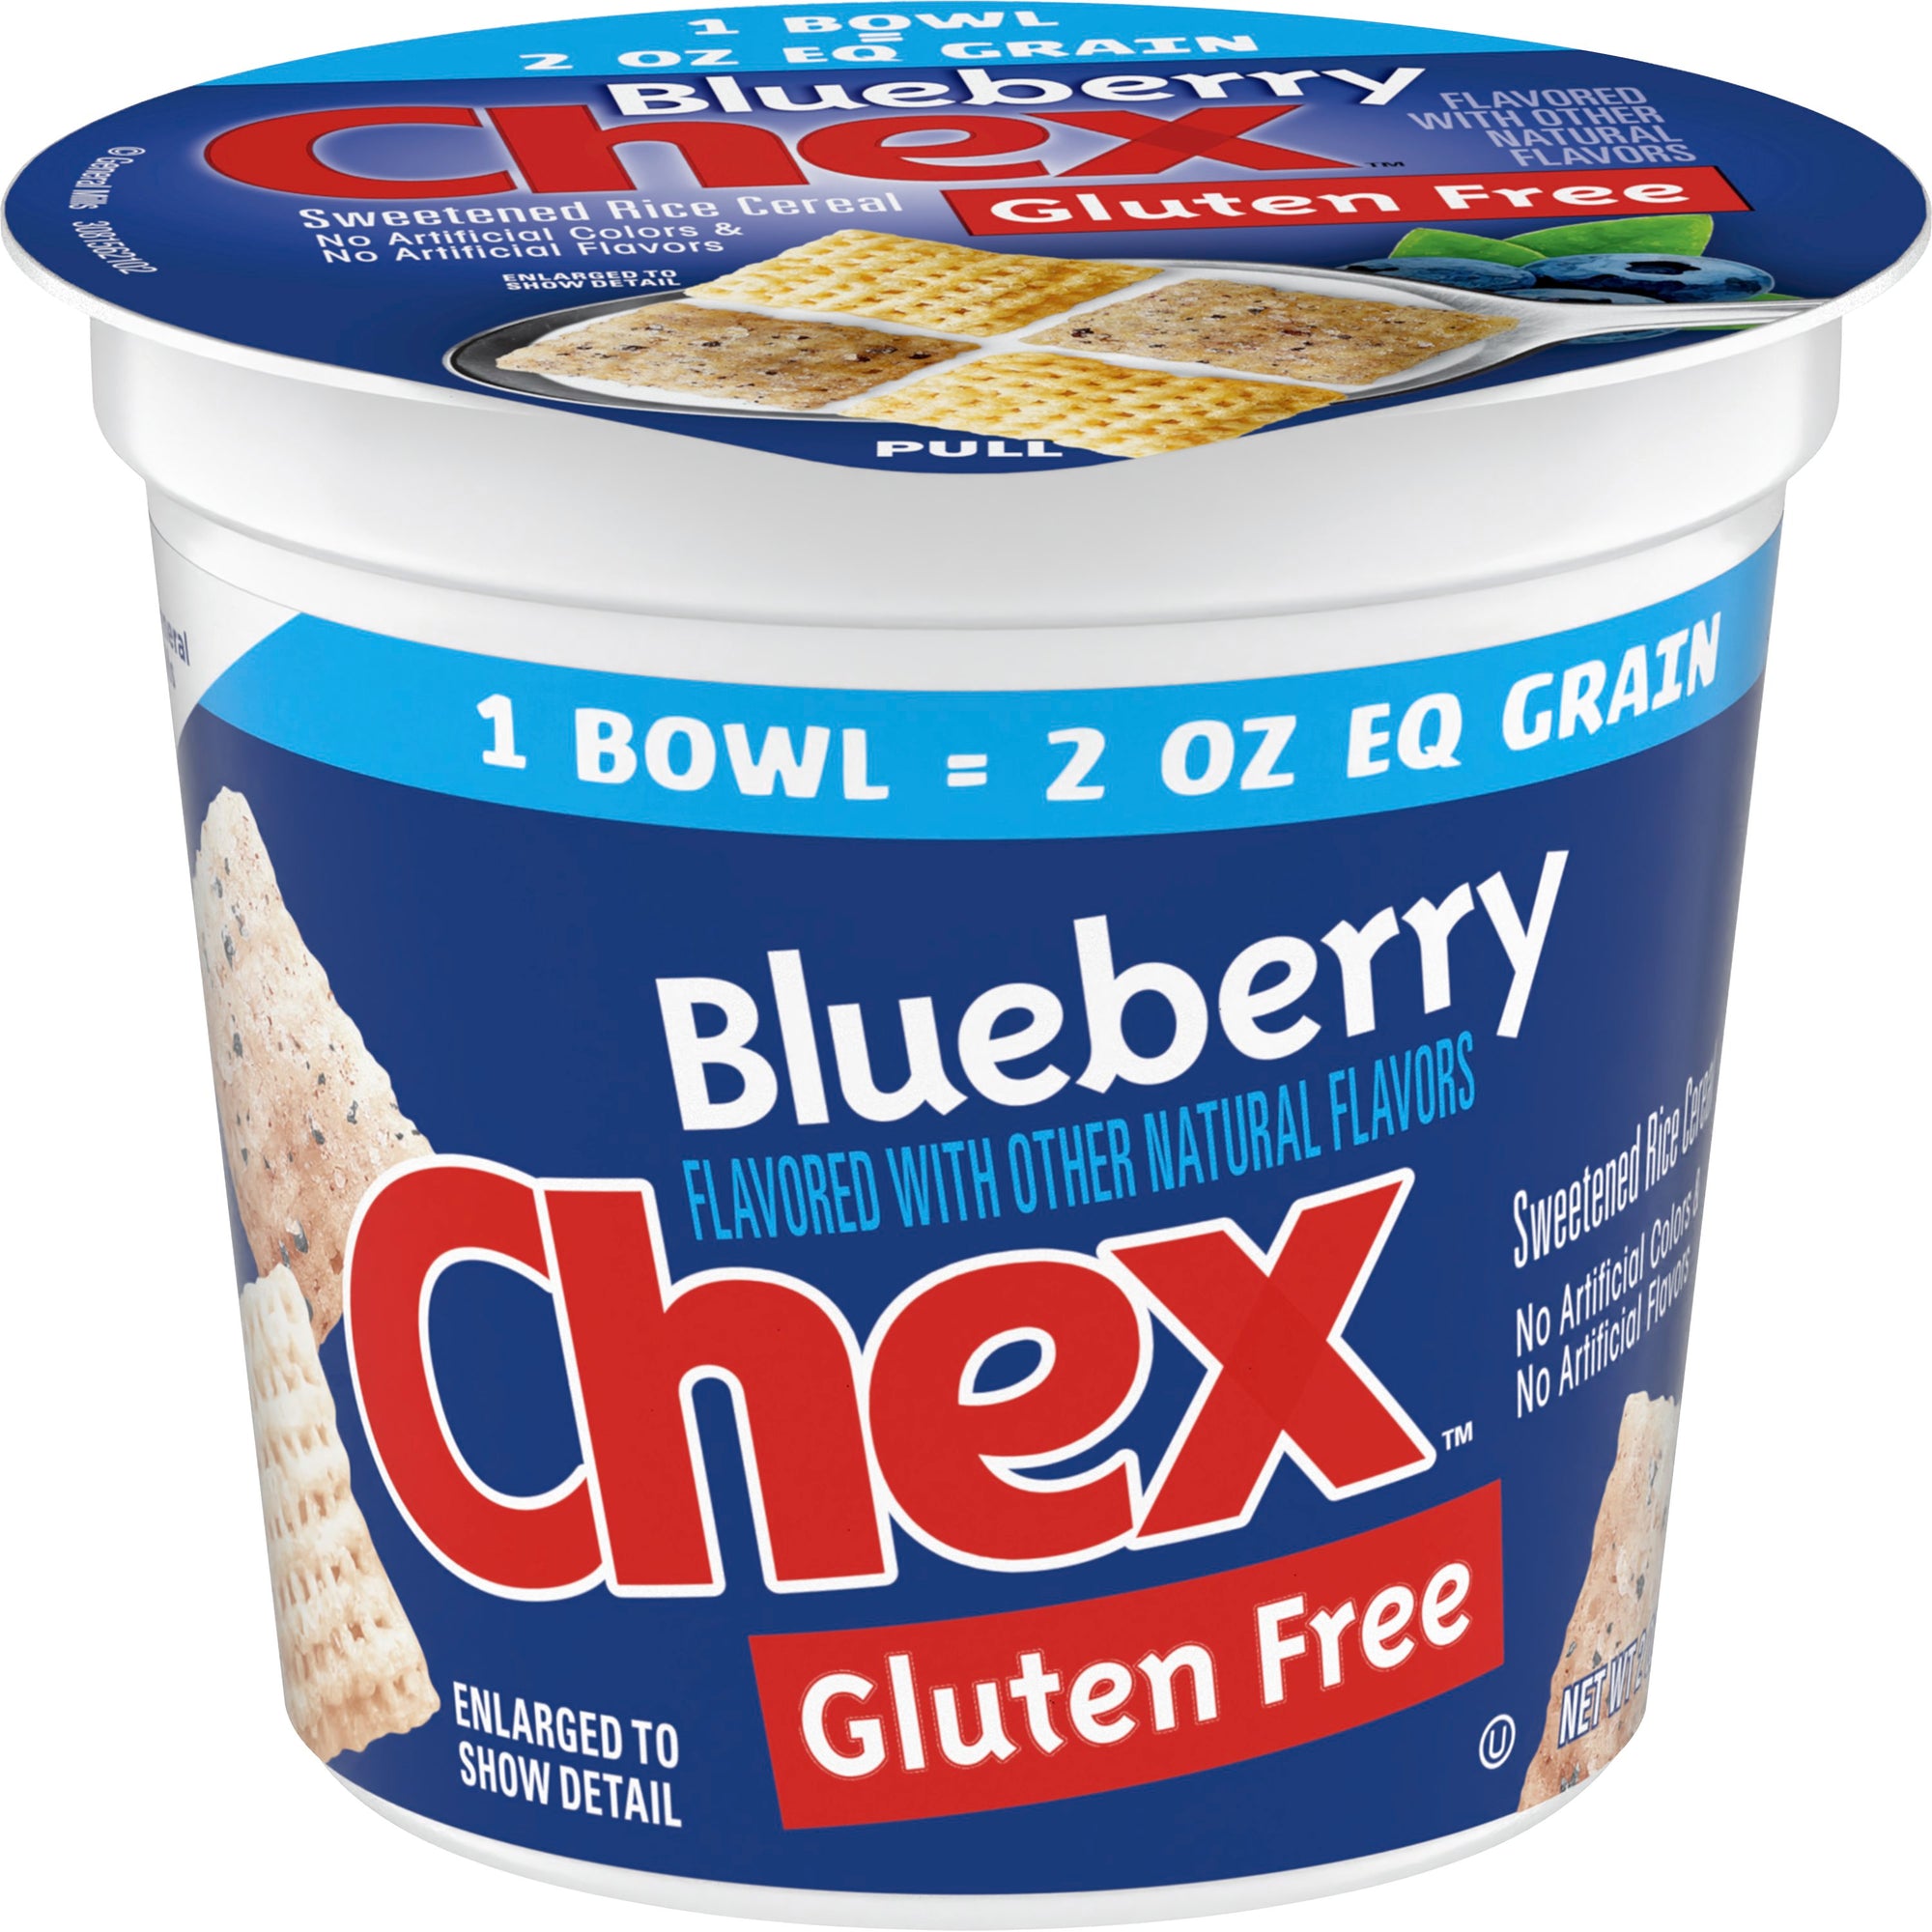 Blueberry Chex Single Serve Cup 2 oz